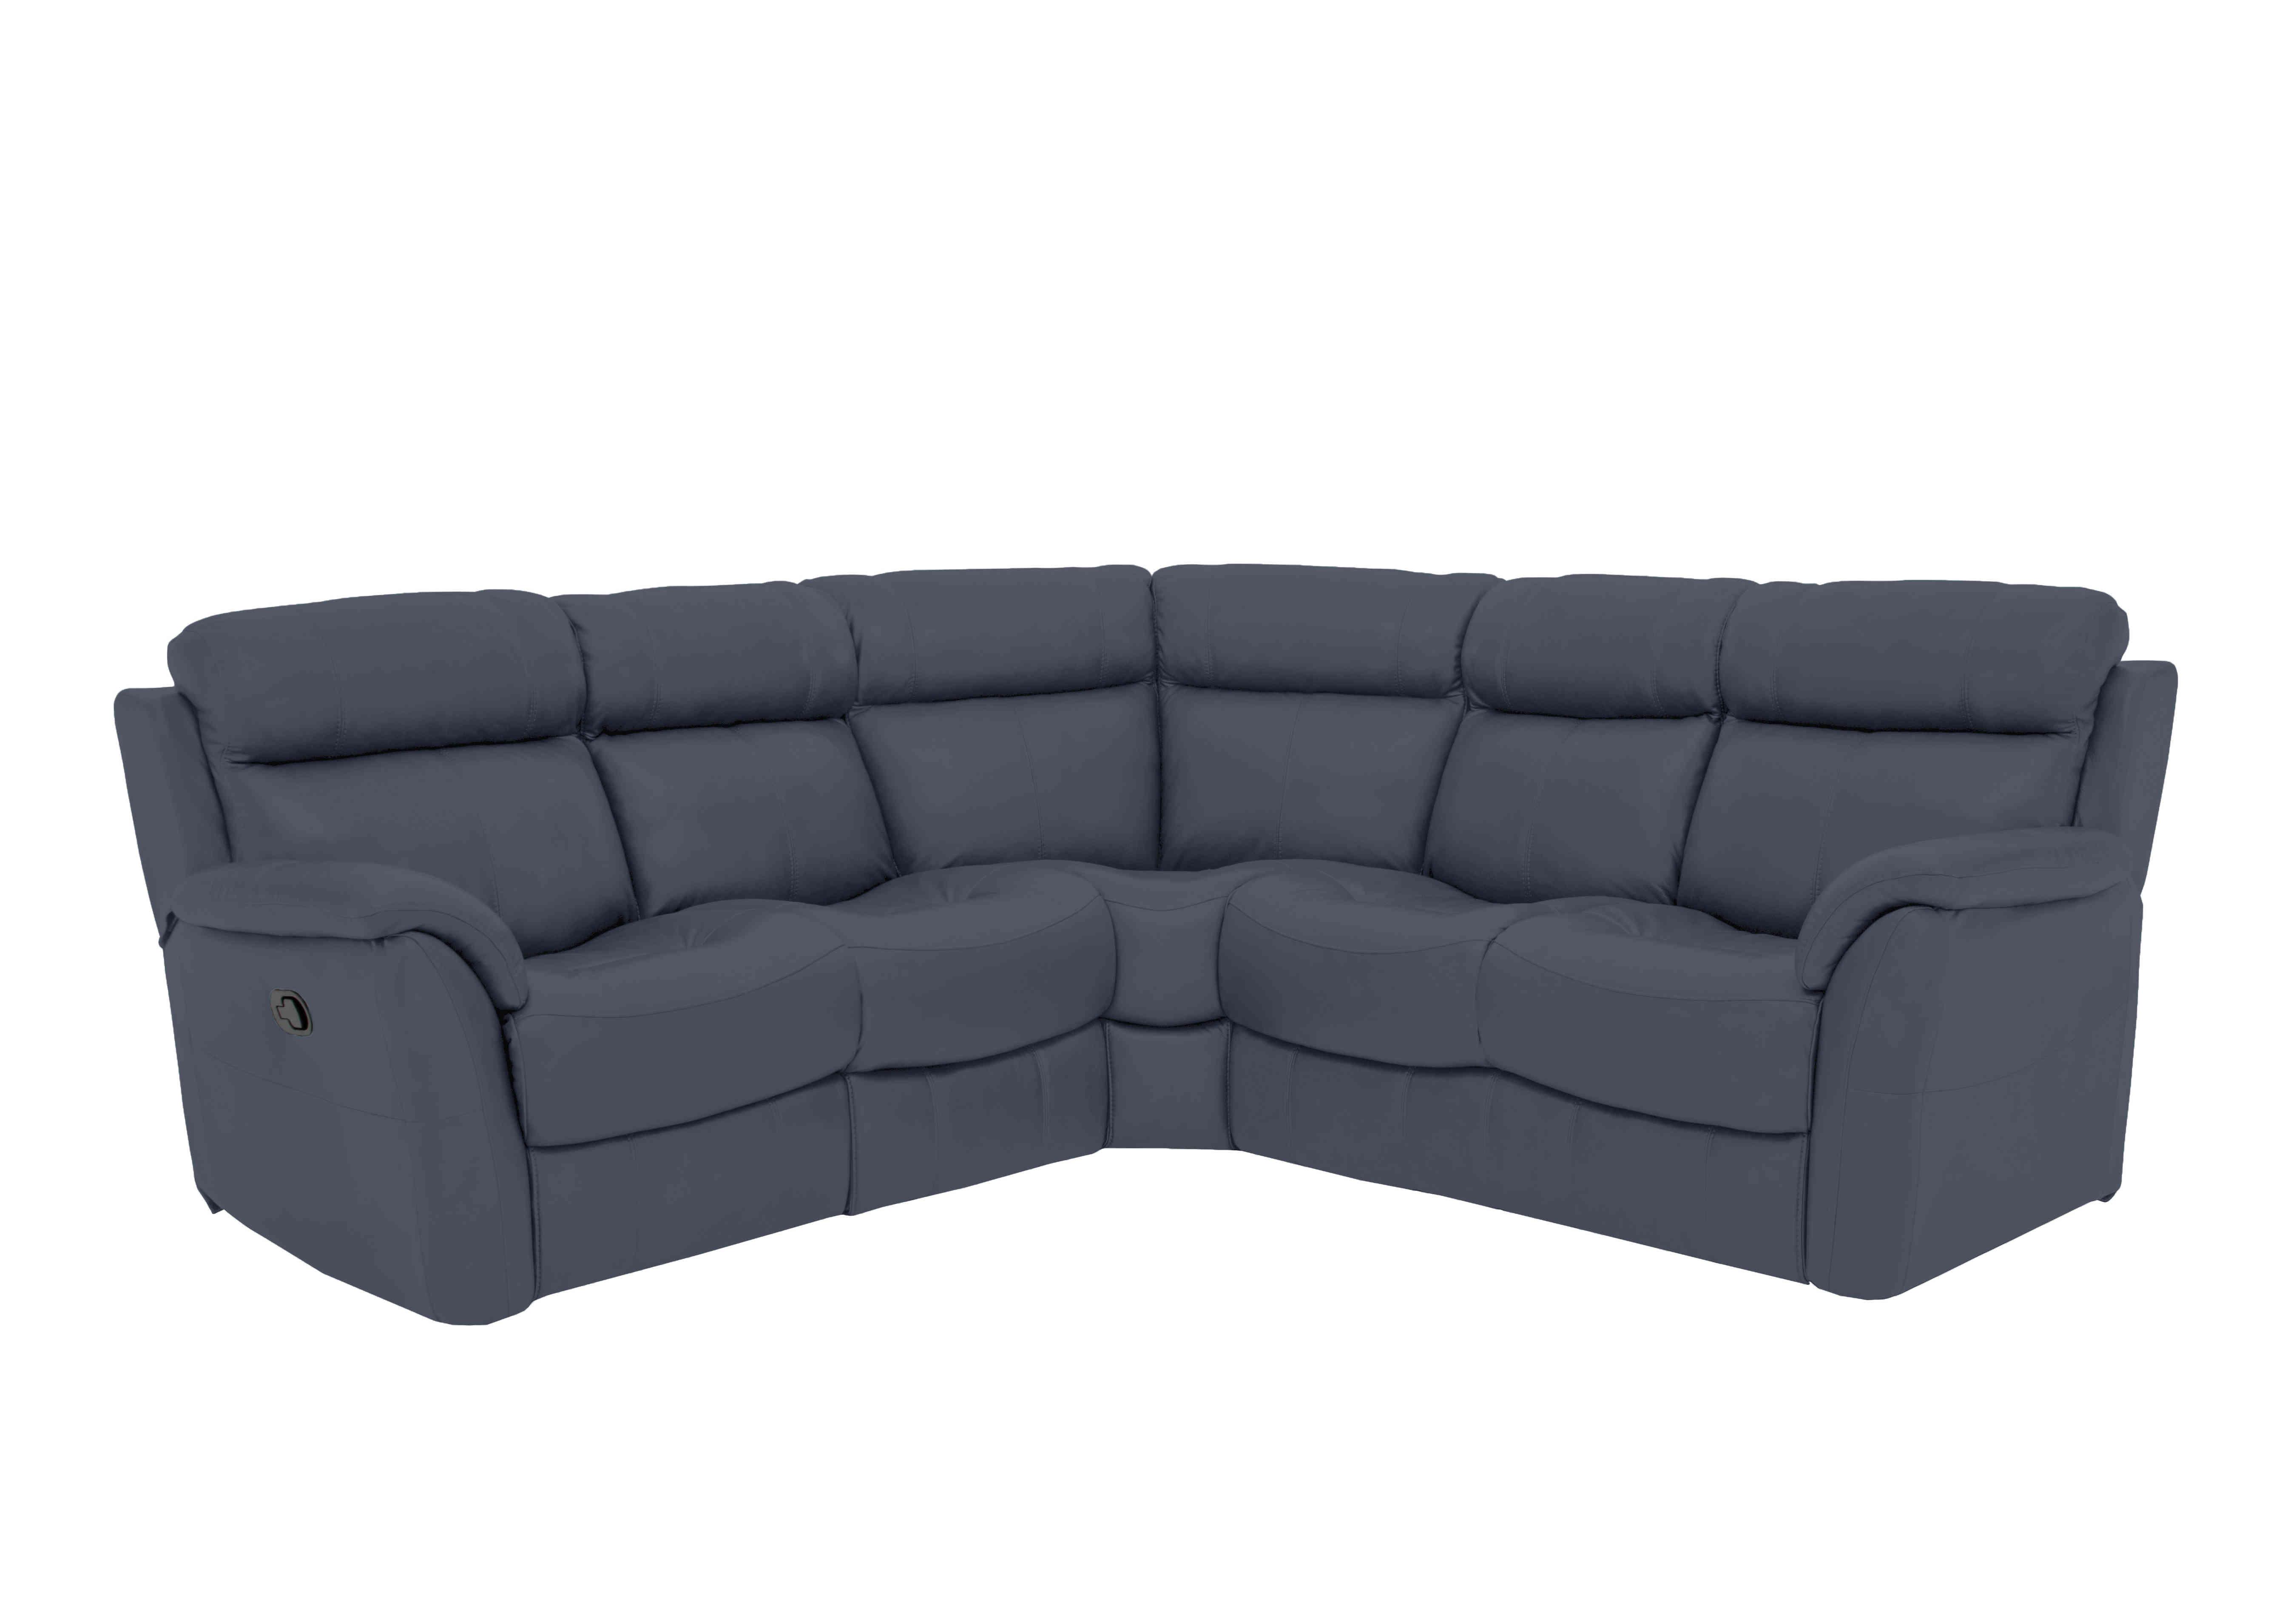 Relax Station Revive Leather Corner Sofa in Bv-313e Ocean Blue on Furniture Village